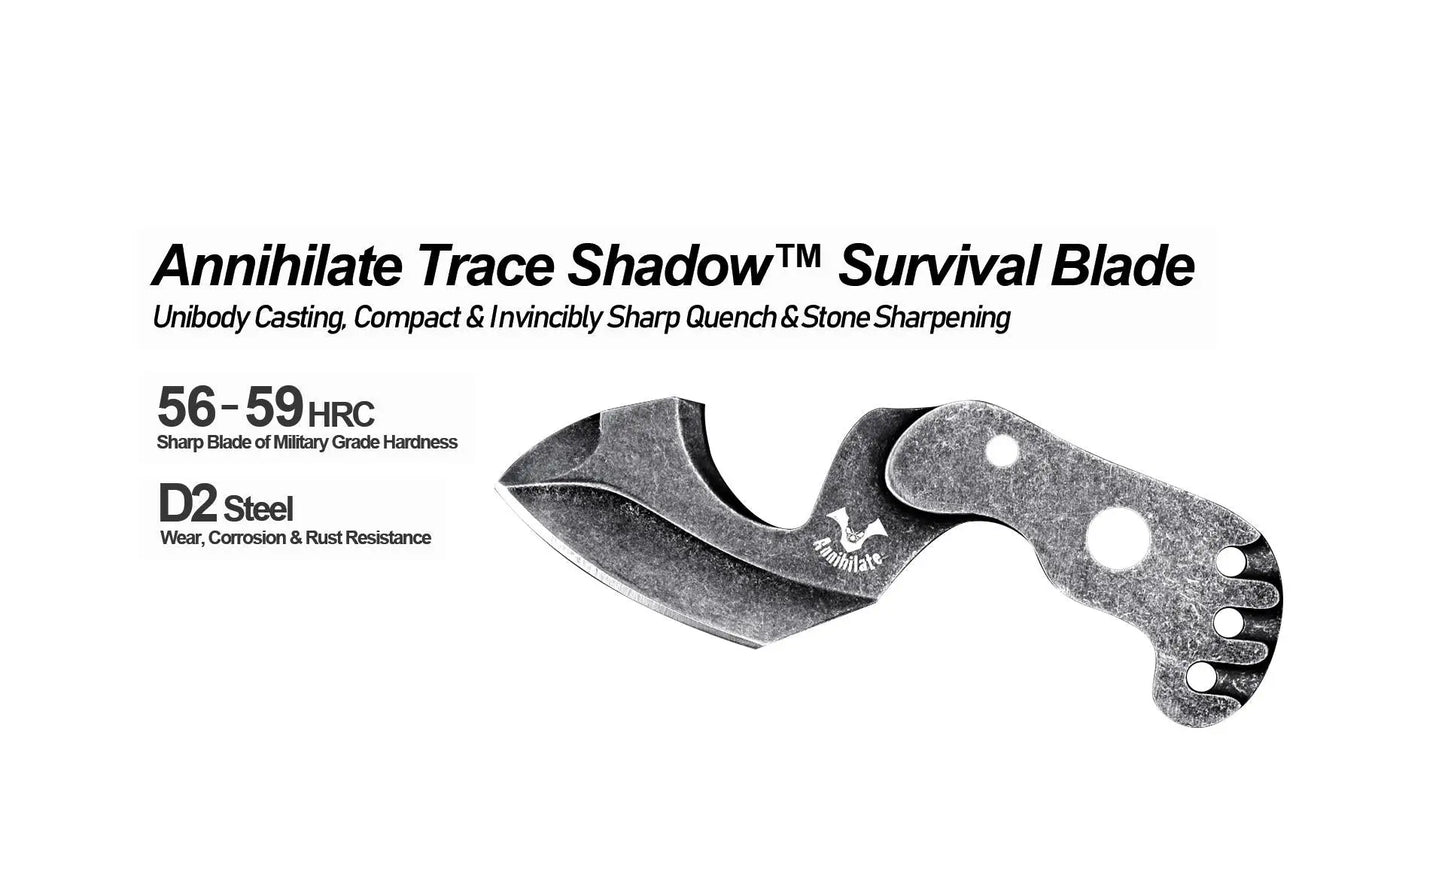 Annihilate Tracing Shadow NSO Gear knife